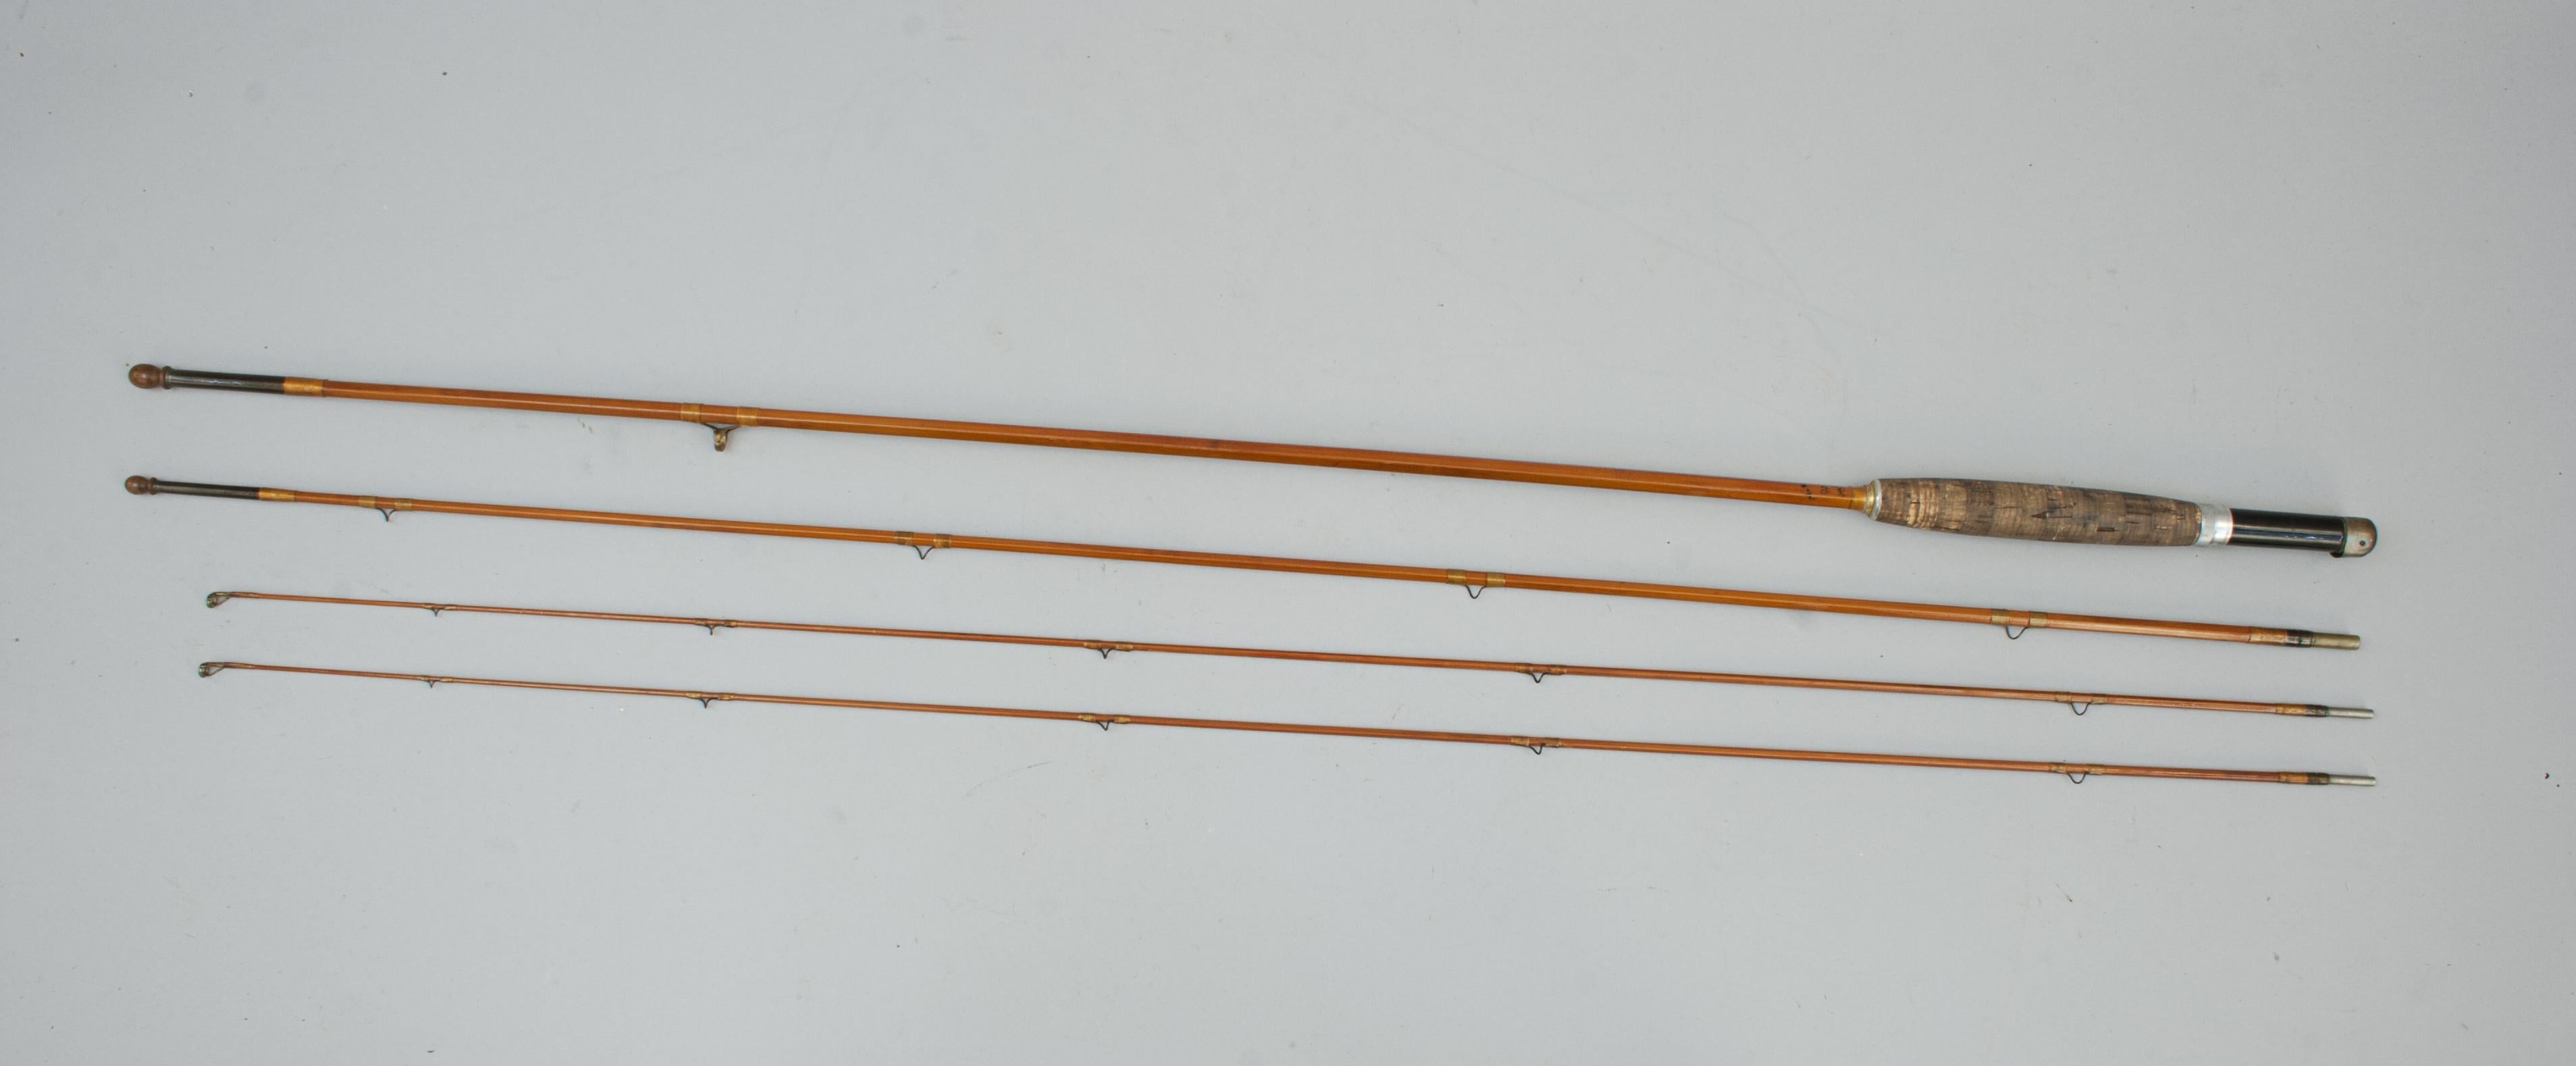 Vintage Cane Fly Rods - 4 For Sale on 1stDibs  cane fishing rods for sale,  cane fly rods for sale